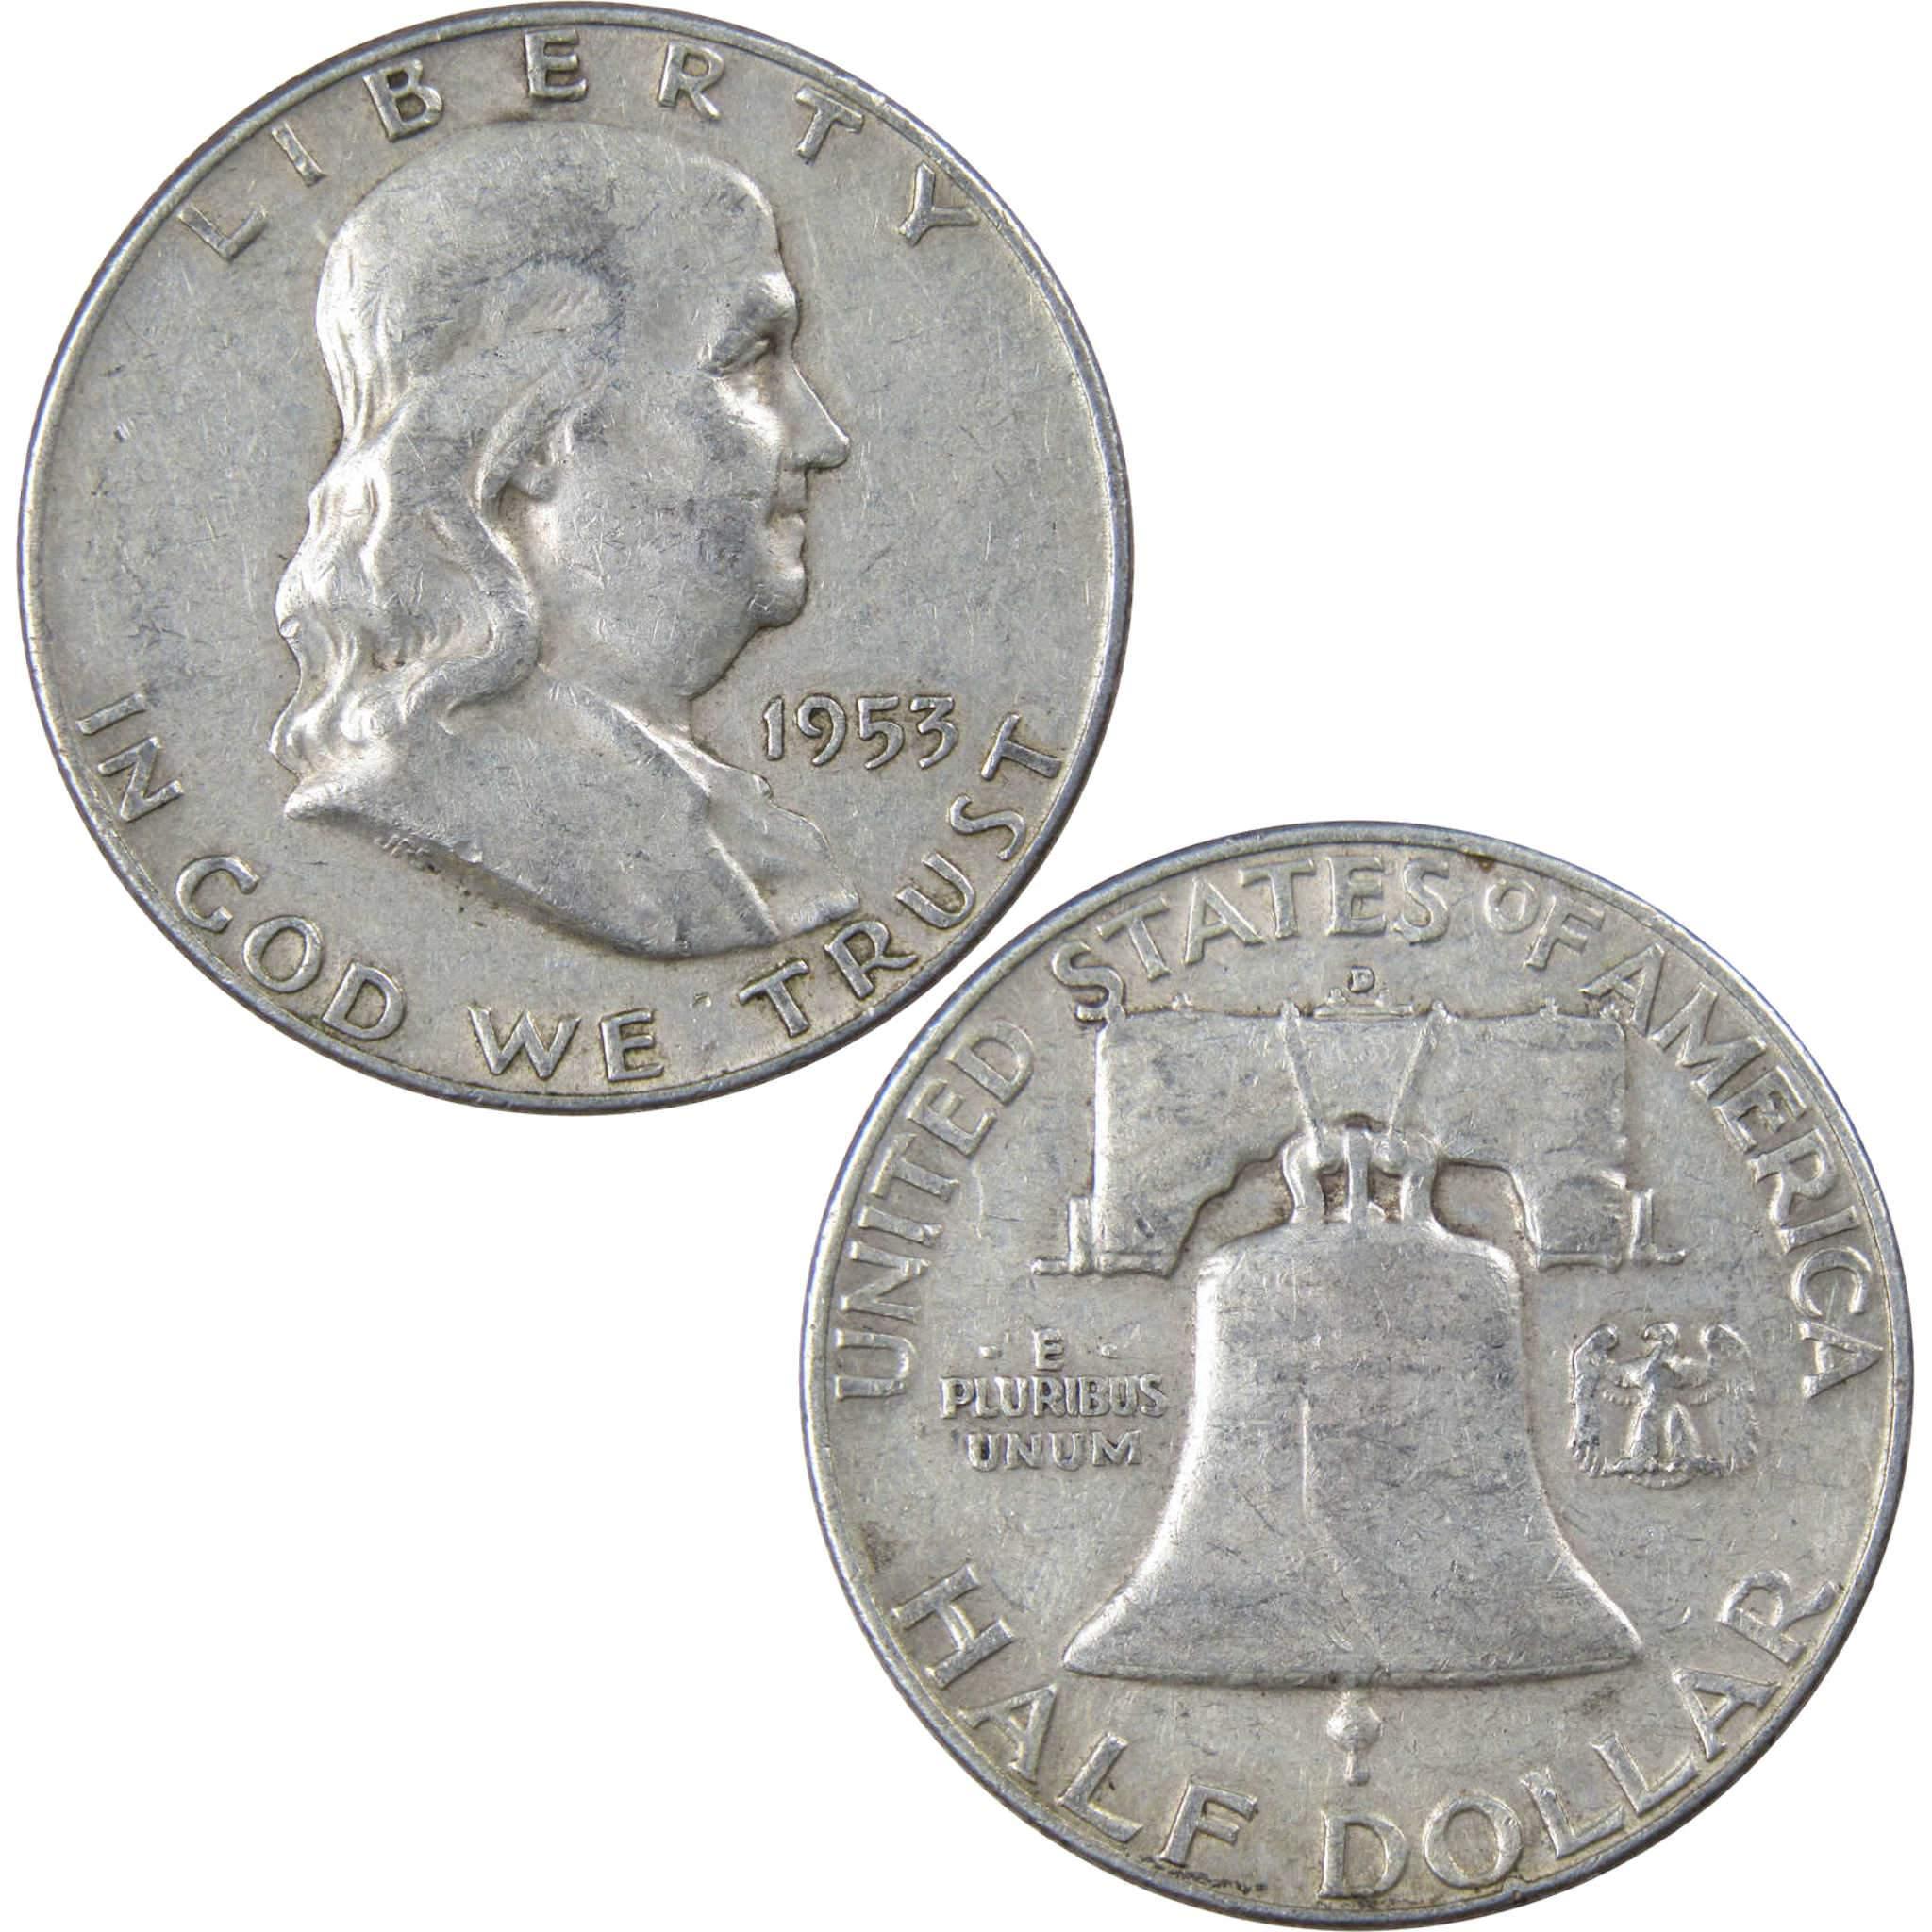 1953 D Franklin Half Dollar VF Very Fine 90% Silver 50c US Coin Collectible